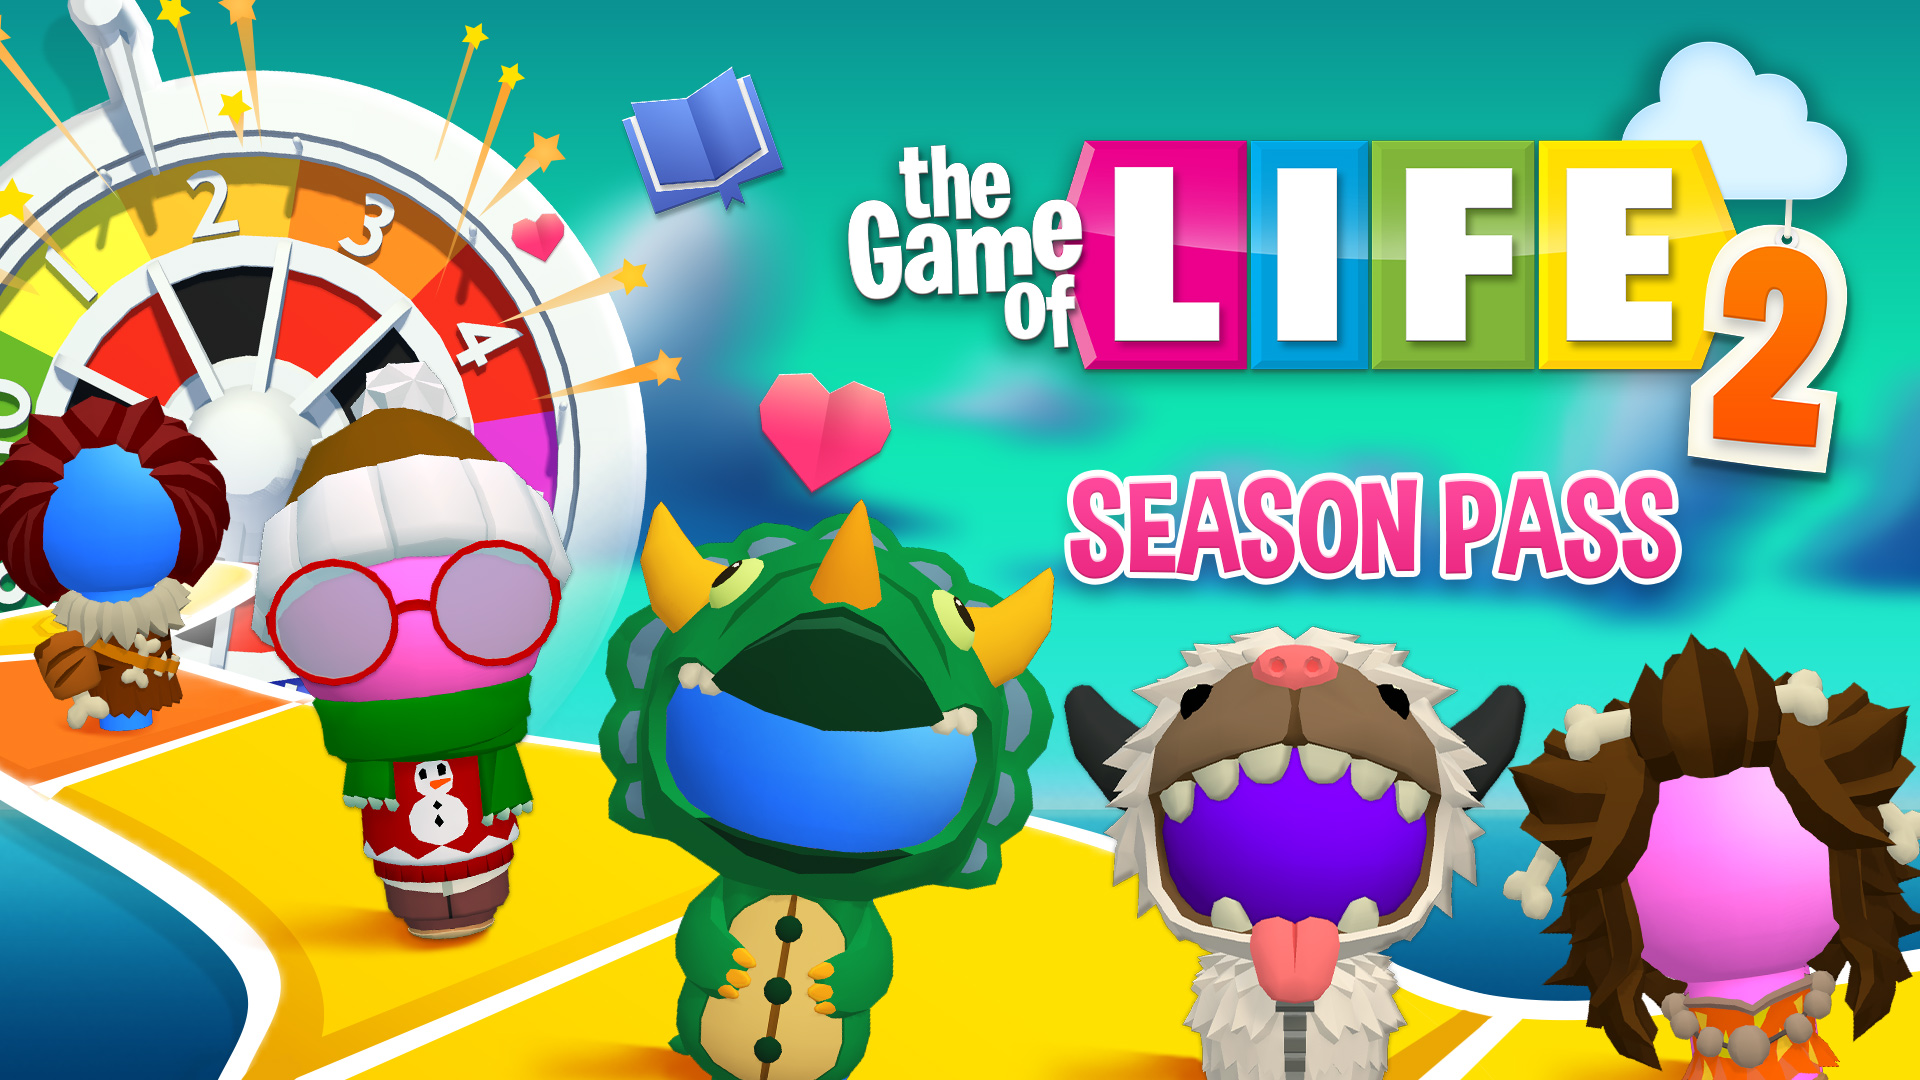 THE GAME OF LIFE 2 - Season Pass